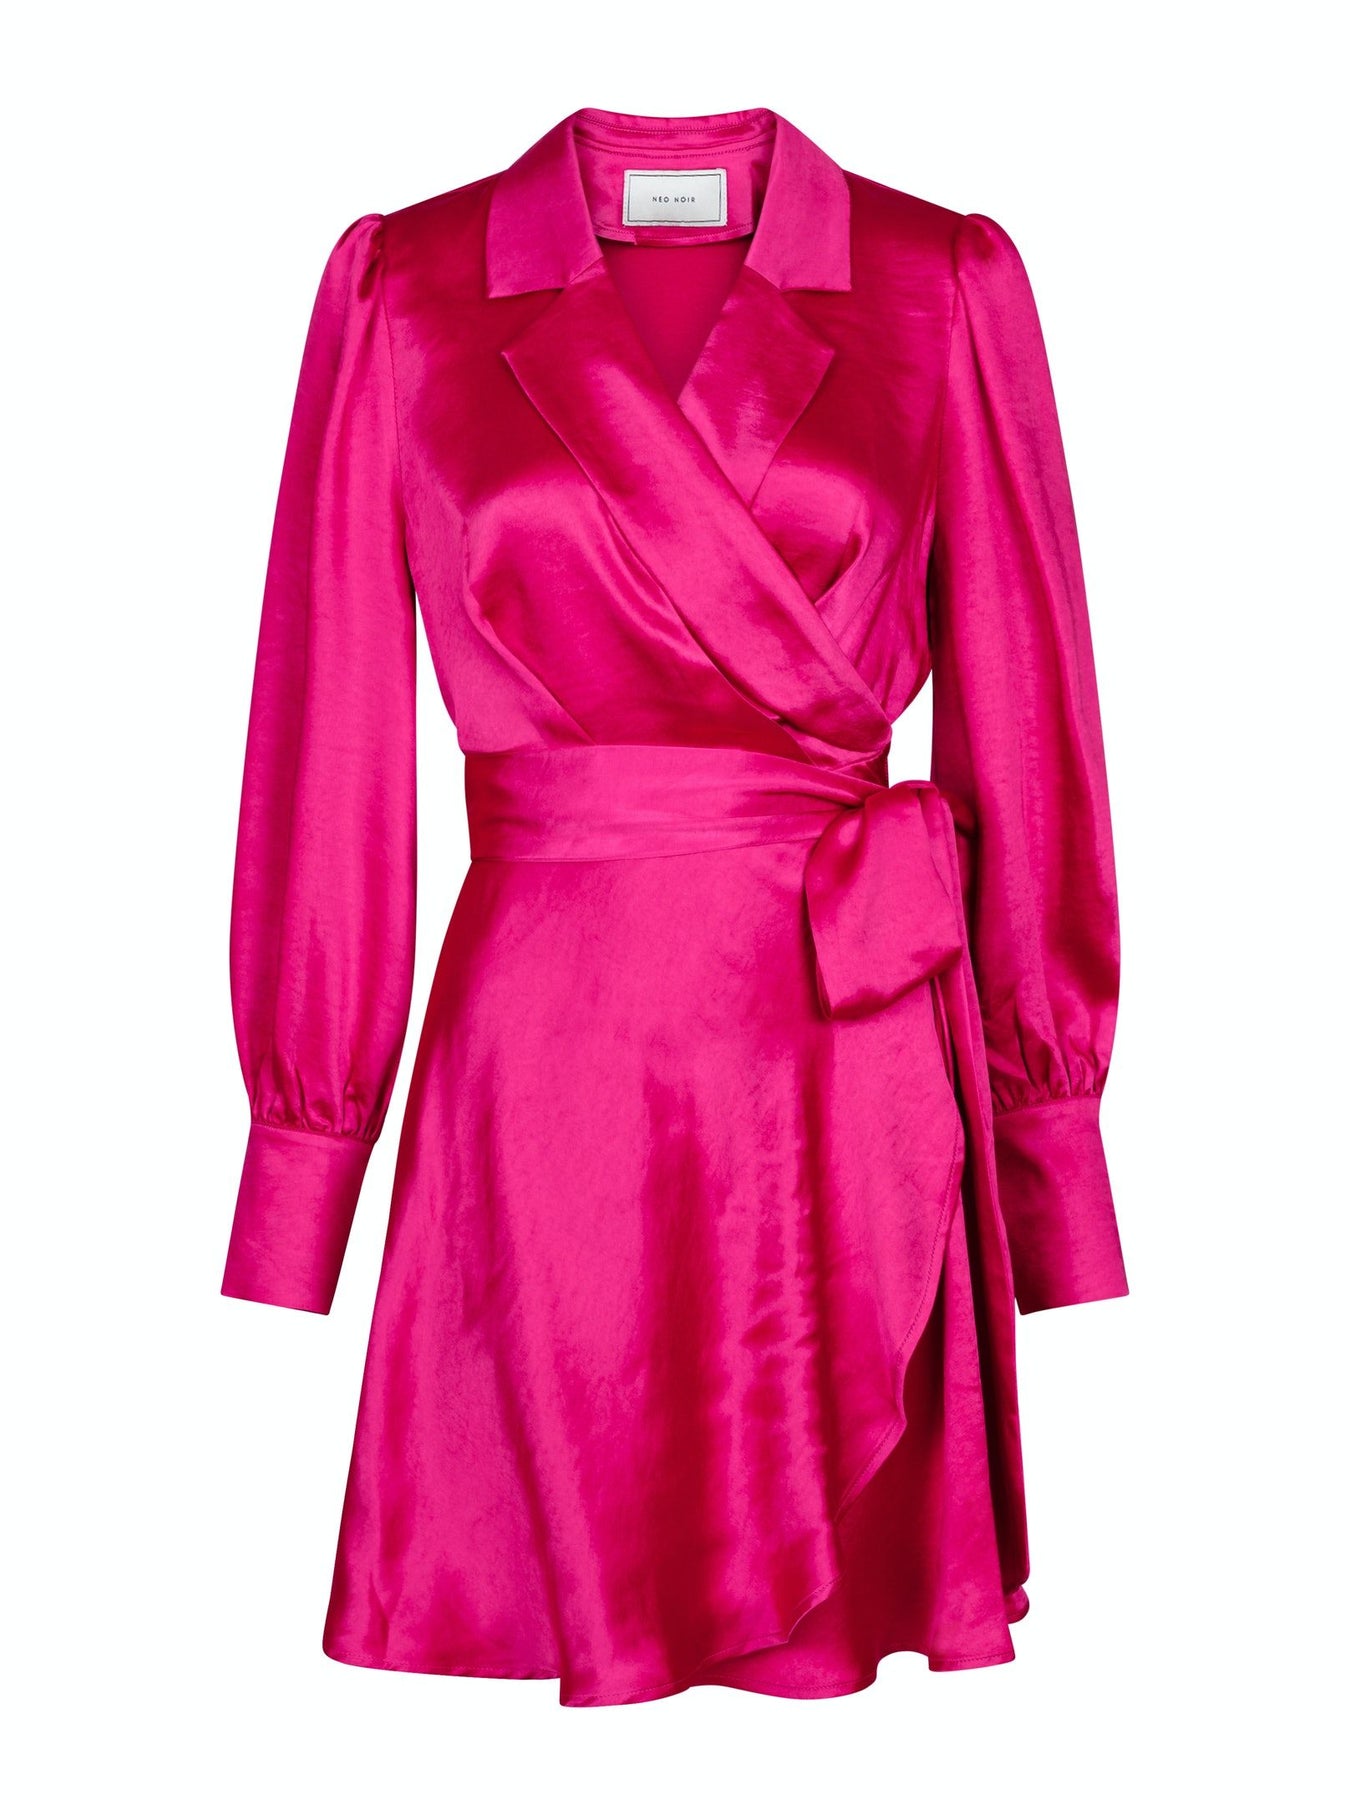 Dawn Satin Dress - Pink